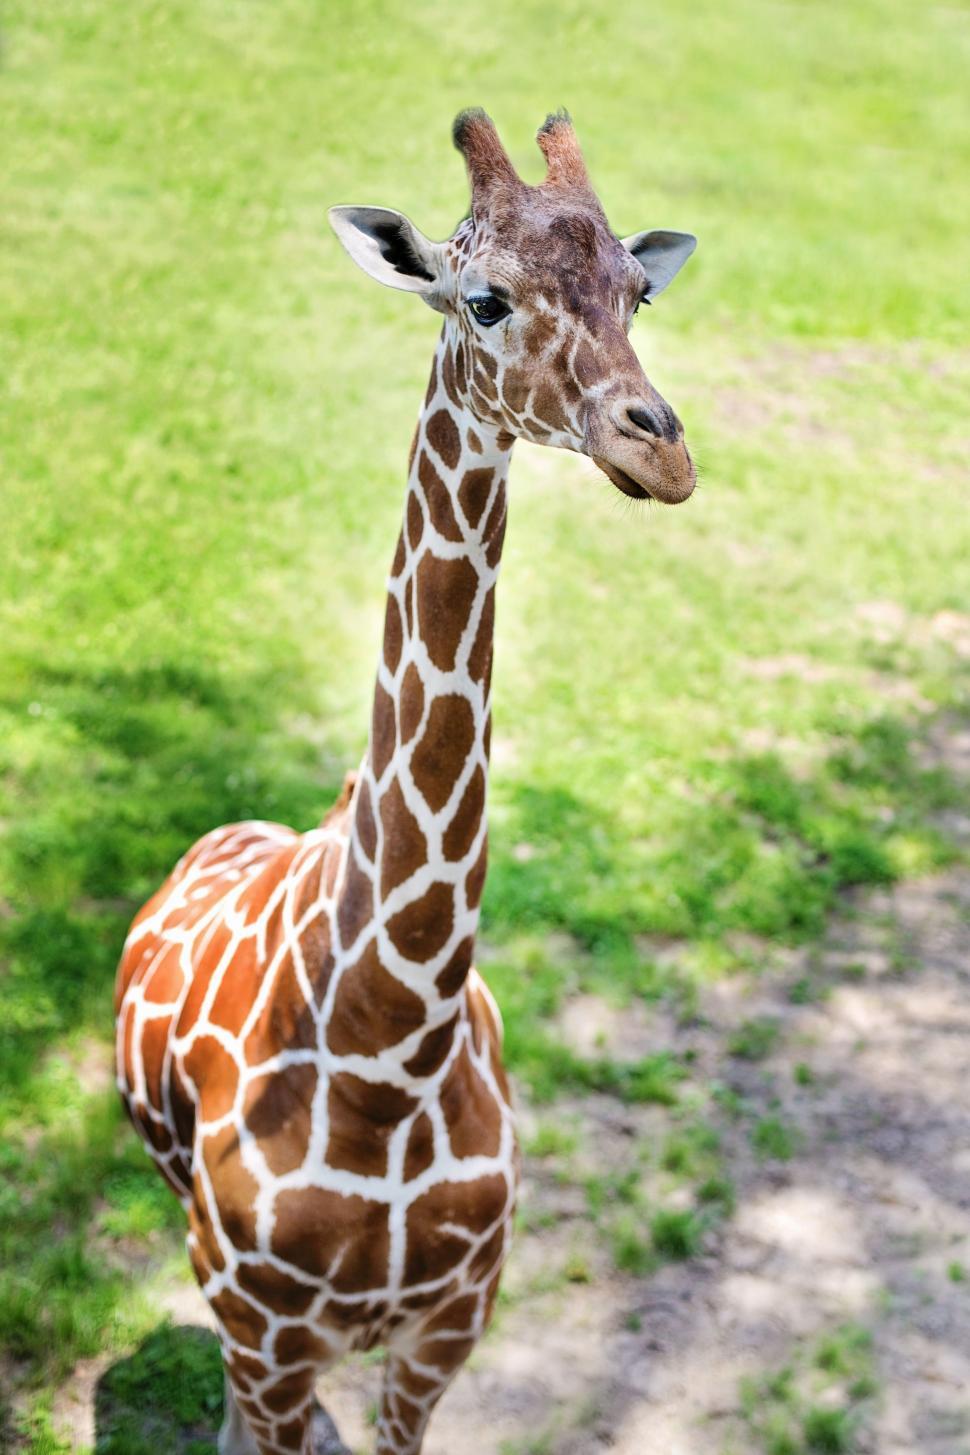 Free Image of Baby giraffe and green grass  